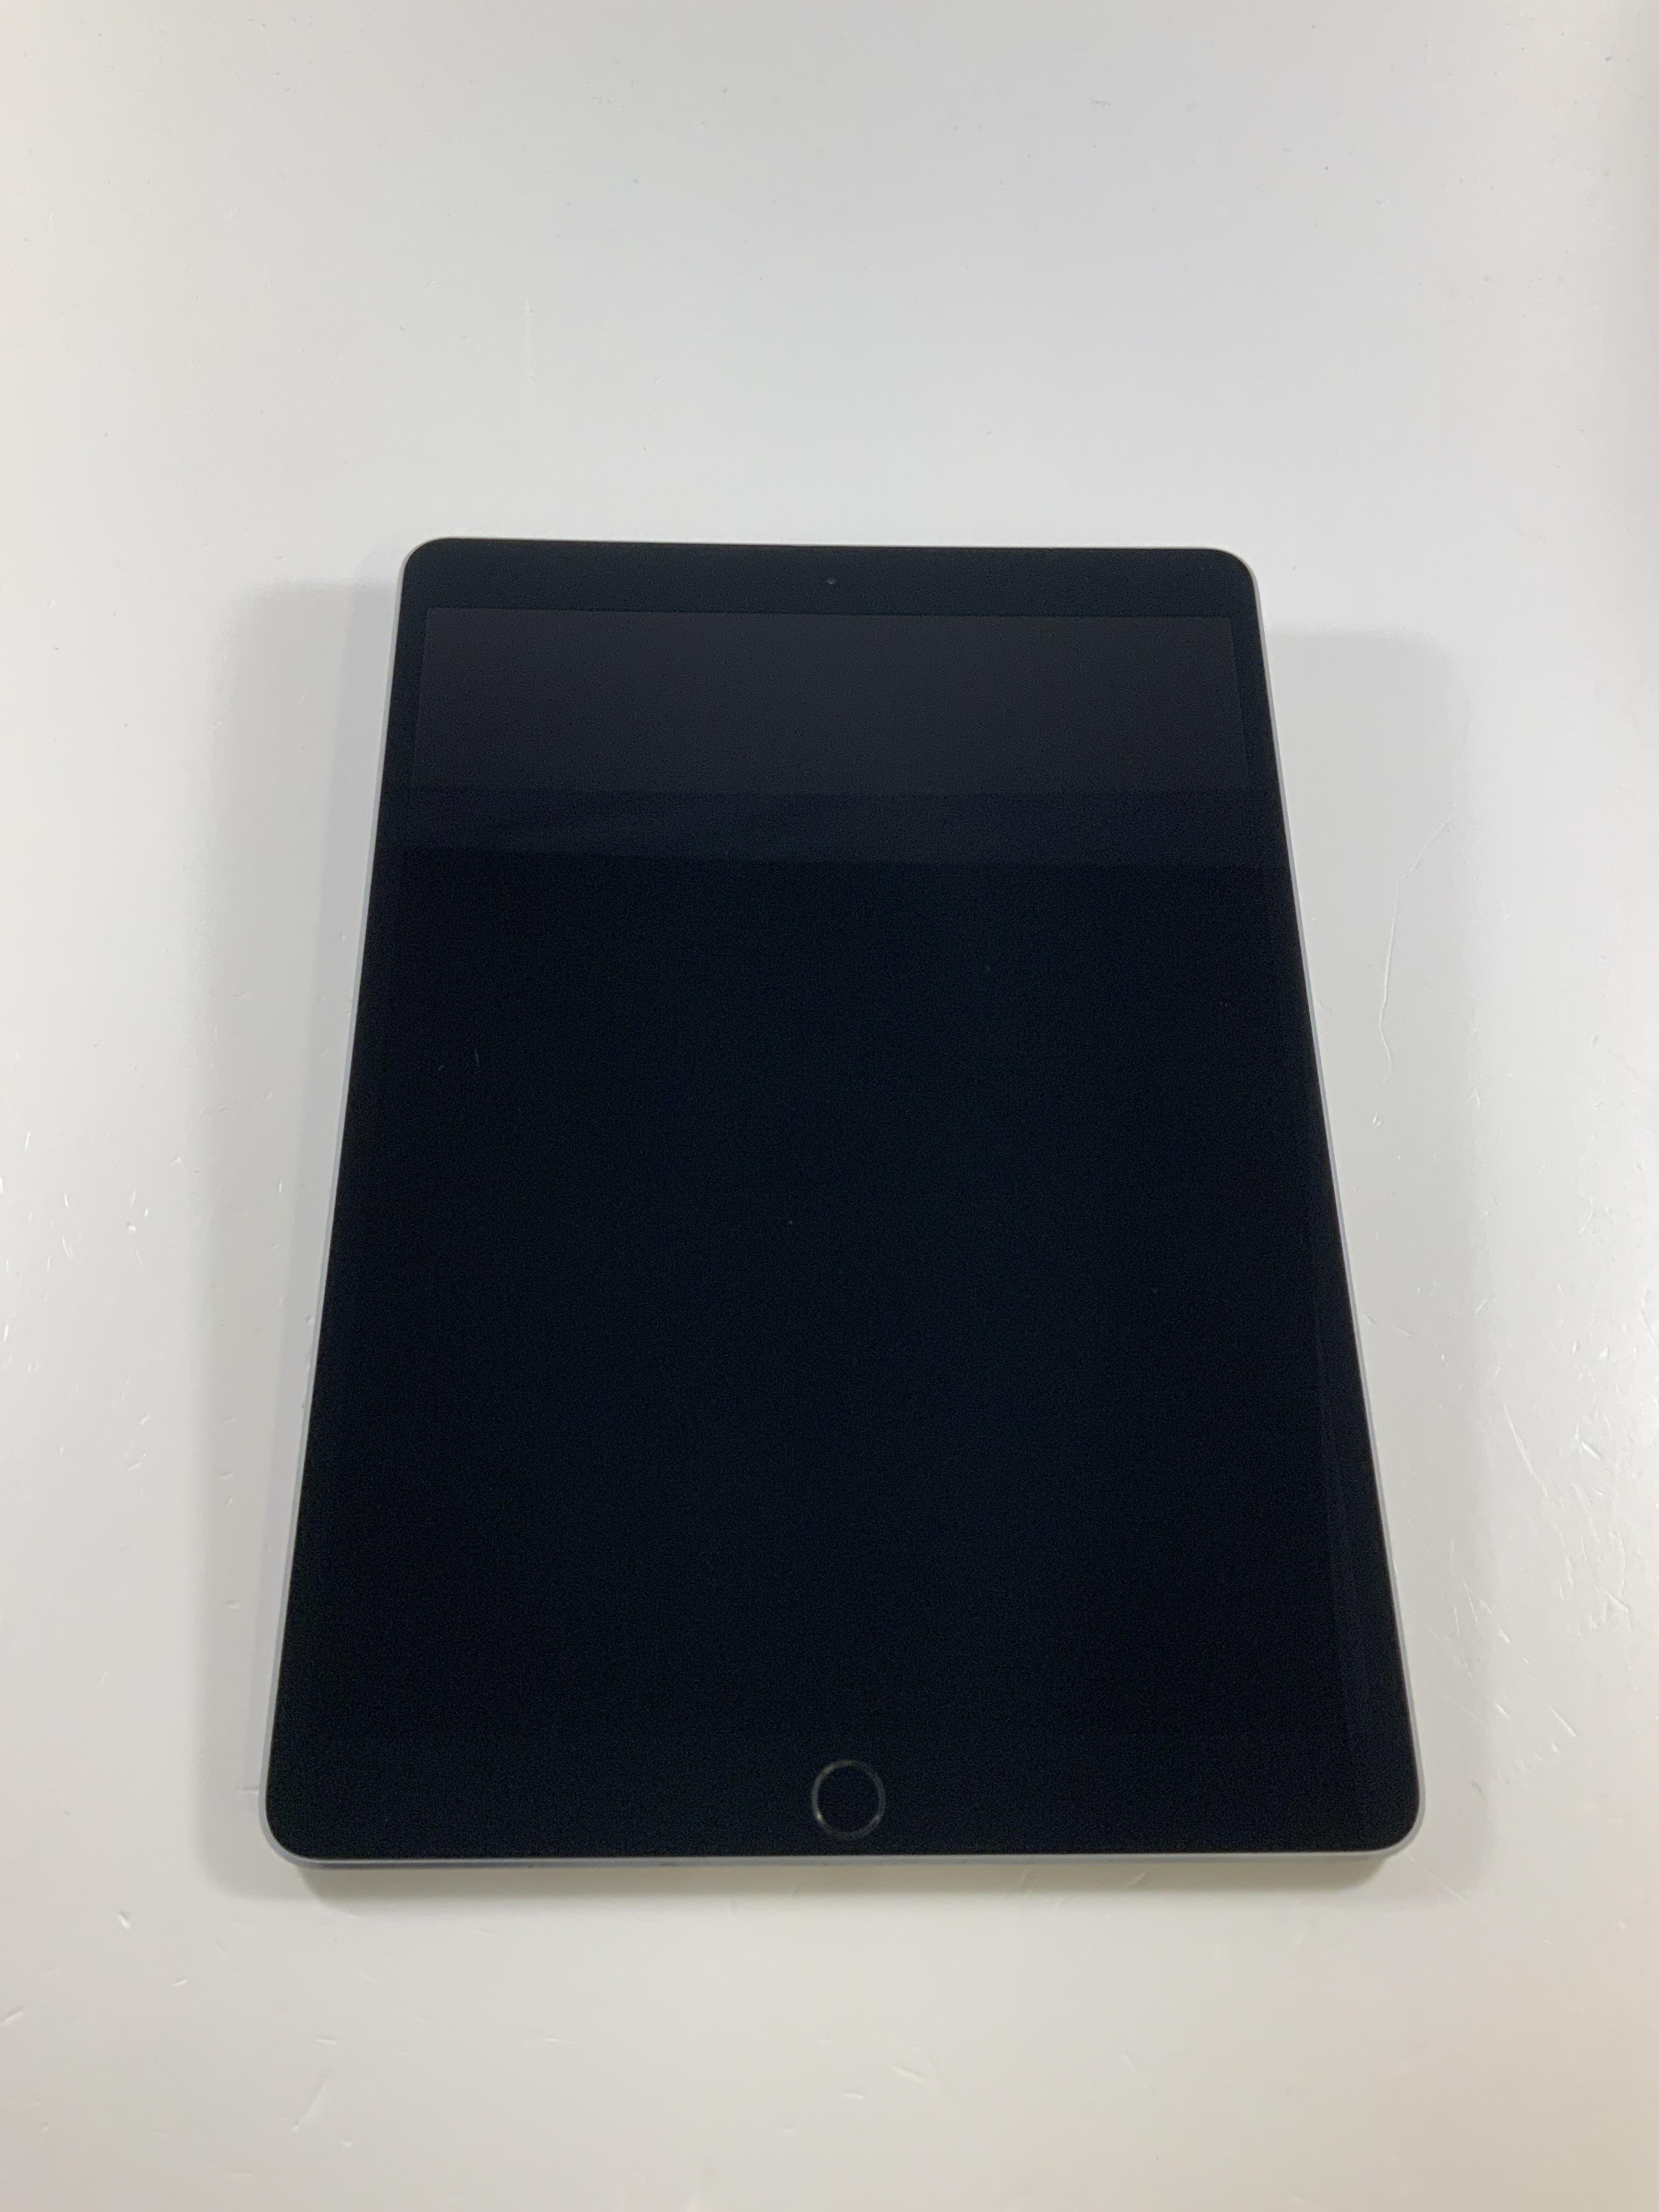 iPad Pro 10.5" Wi-Fi + Cellular 64GB, 64GB, Space Gray, immagine 1